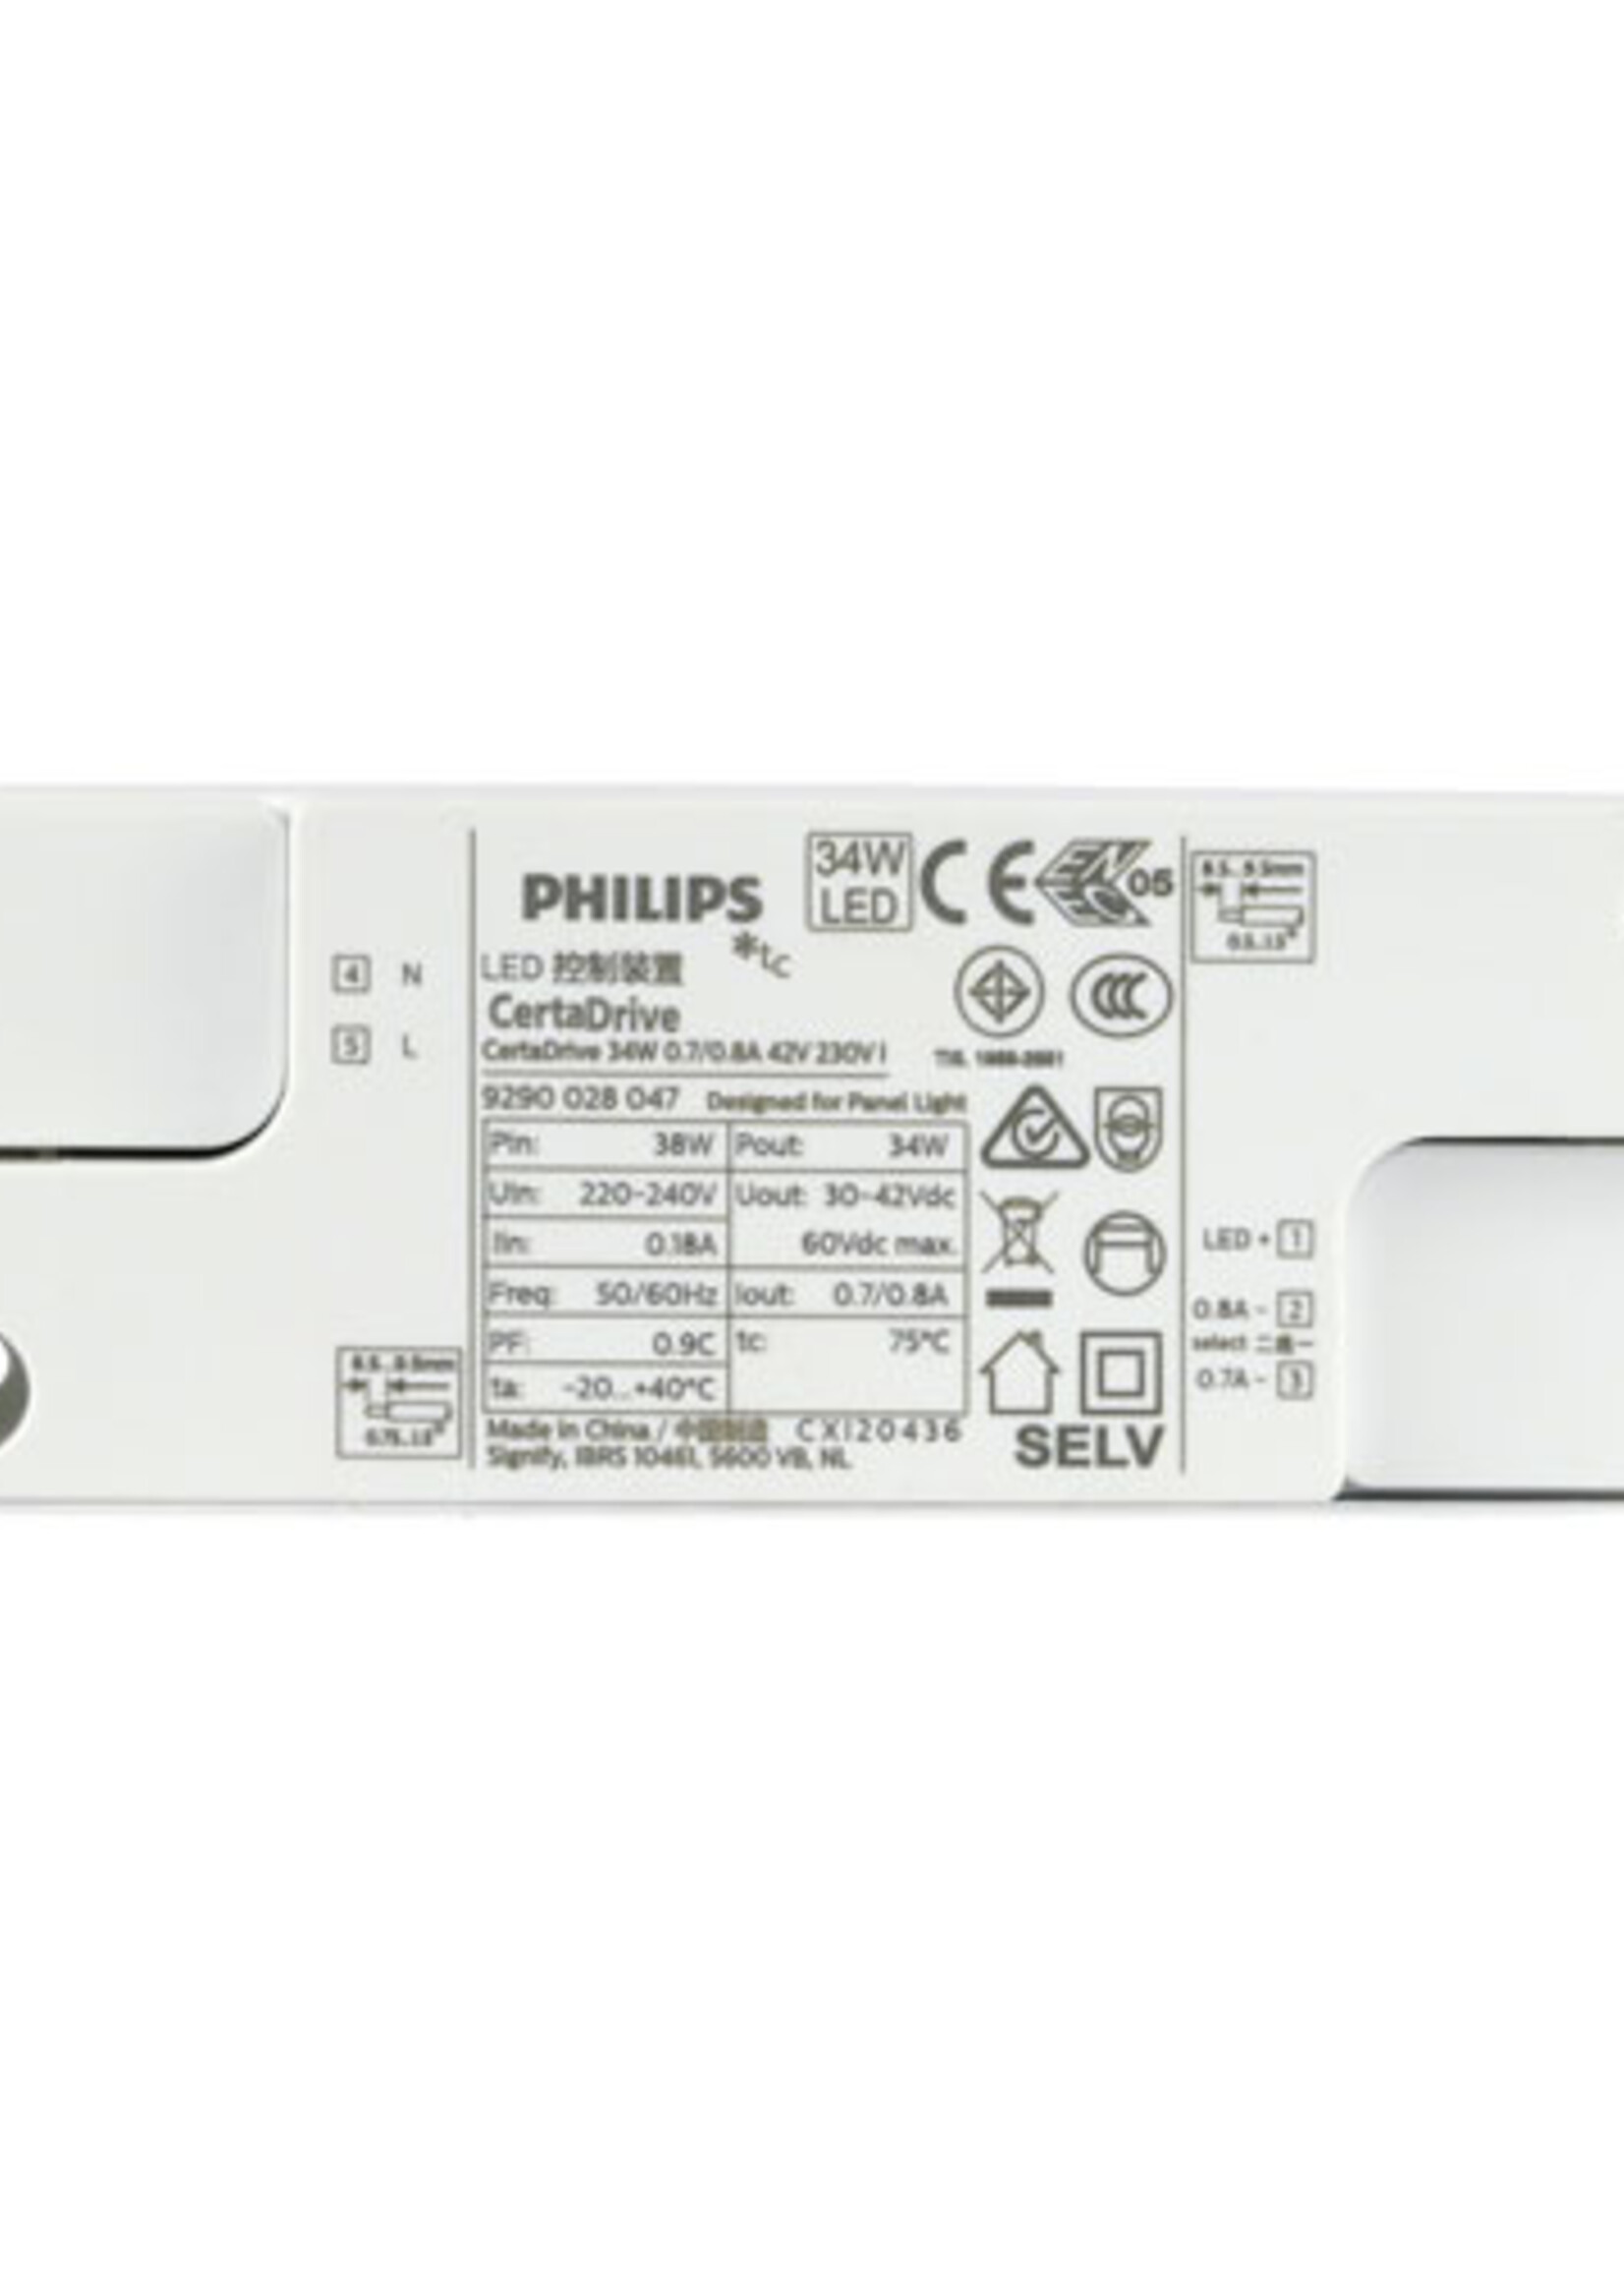 Philips CertaDrive Philips LED Driver 34W 700mA/800mA flicker-free